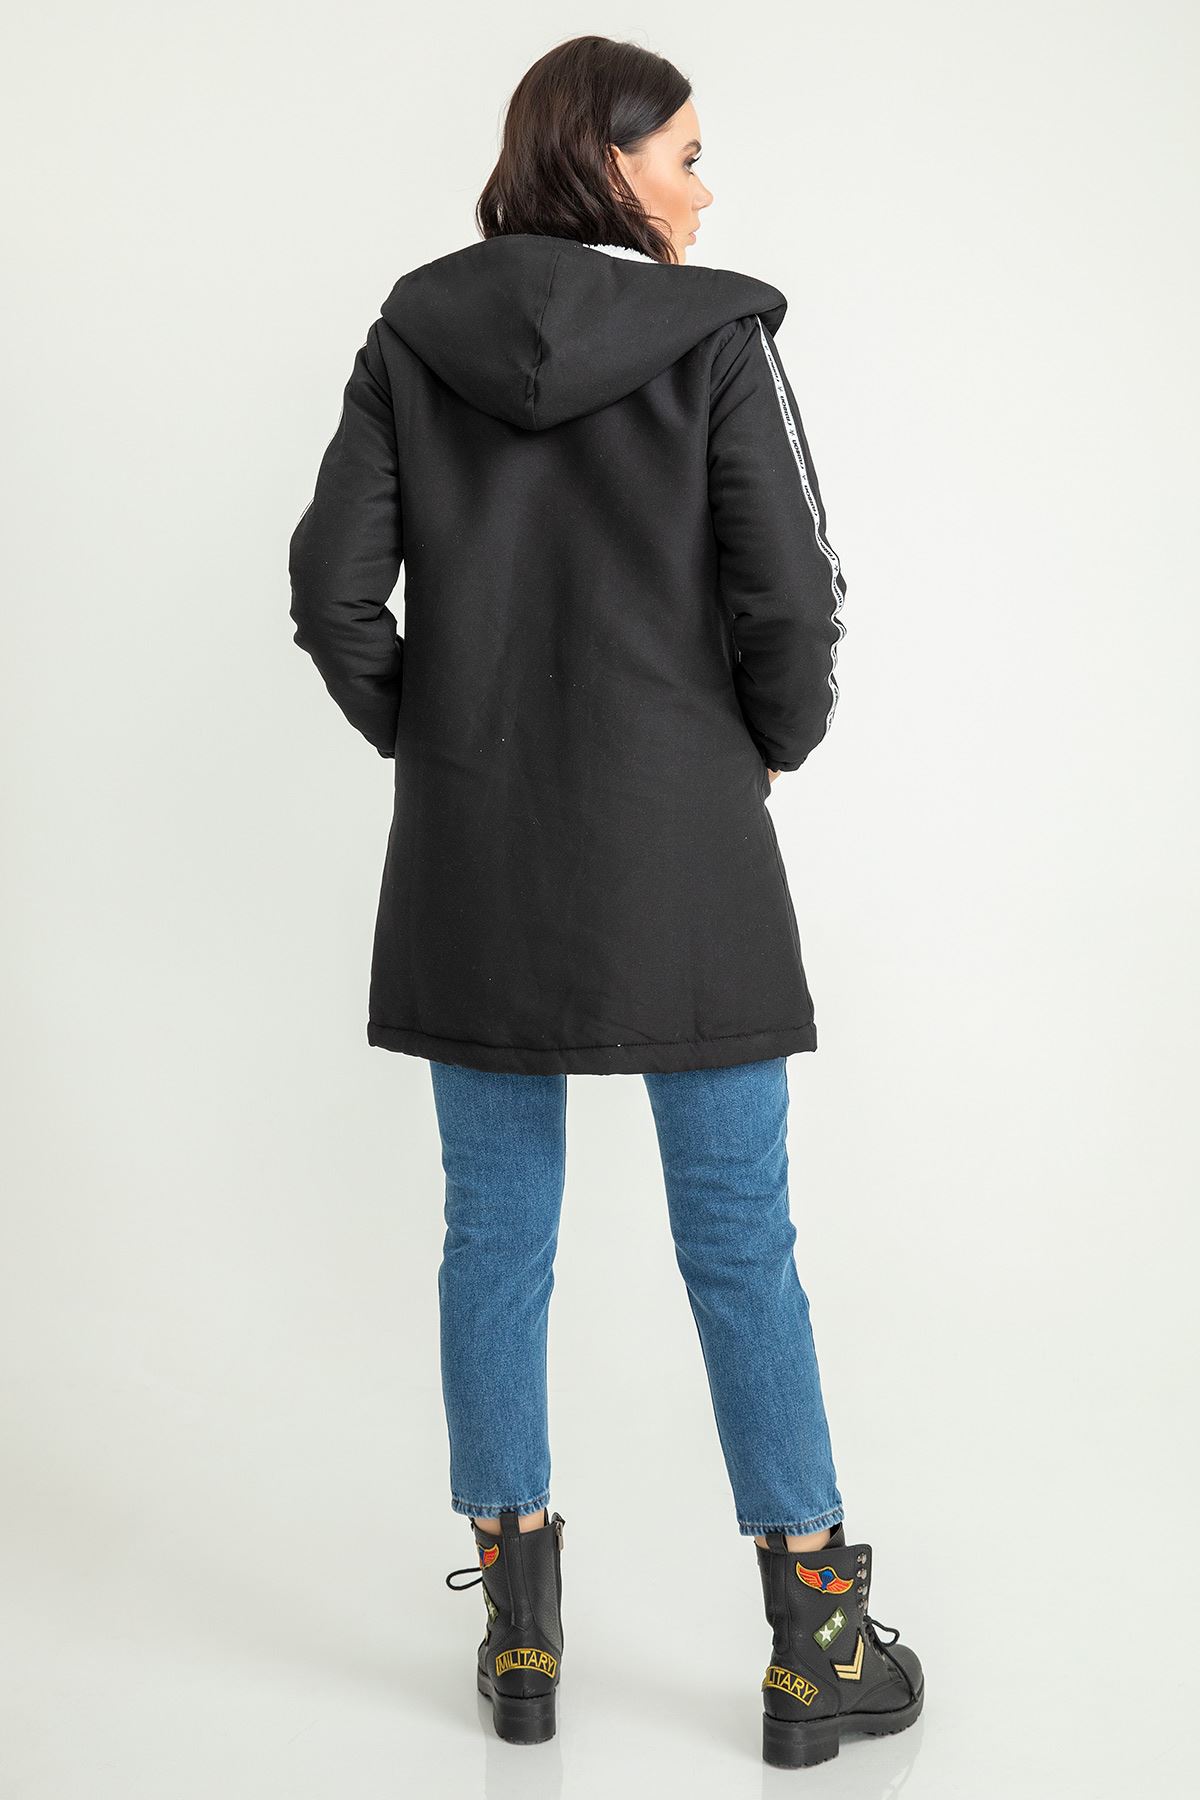 Knit Fabric Long Sleeve Hooded Below Hip Plush Full Fit Women Coat - Black